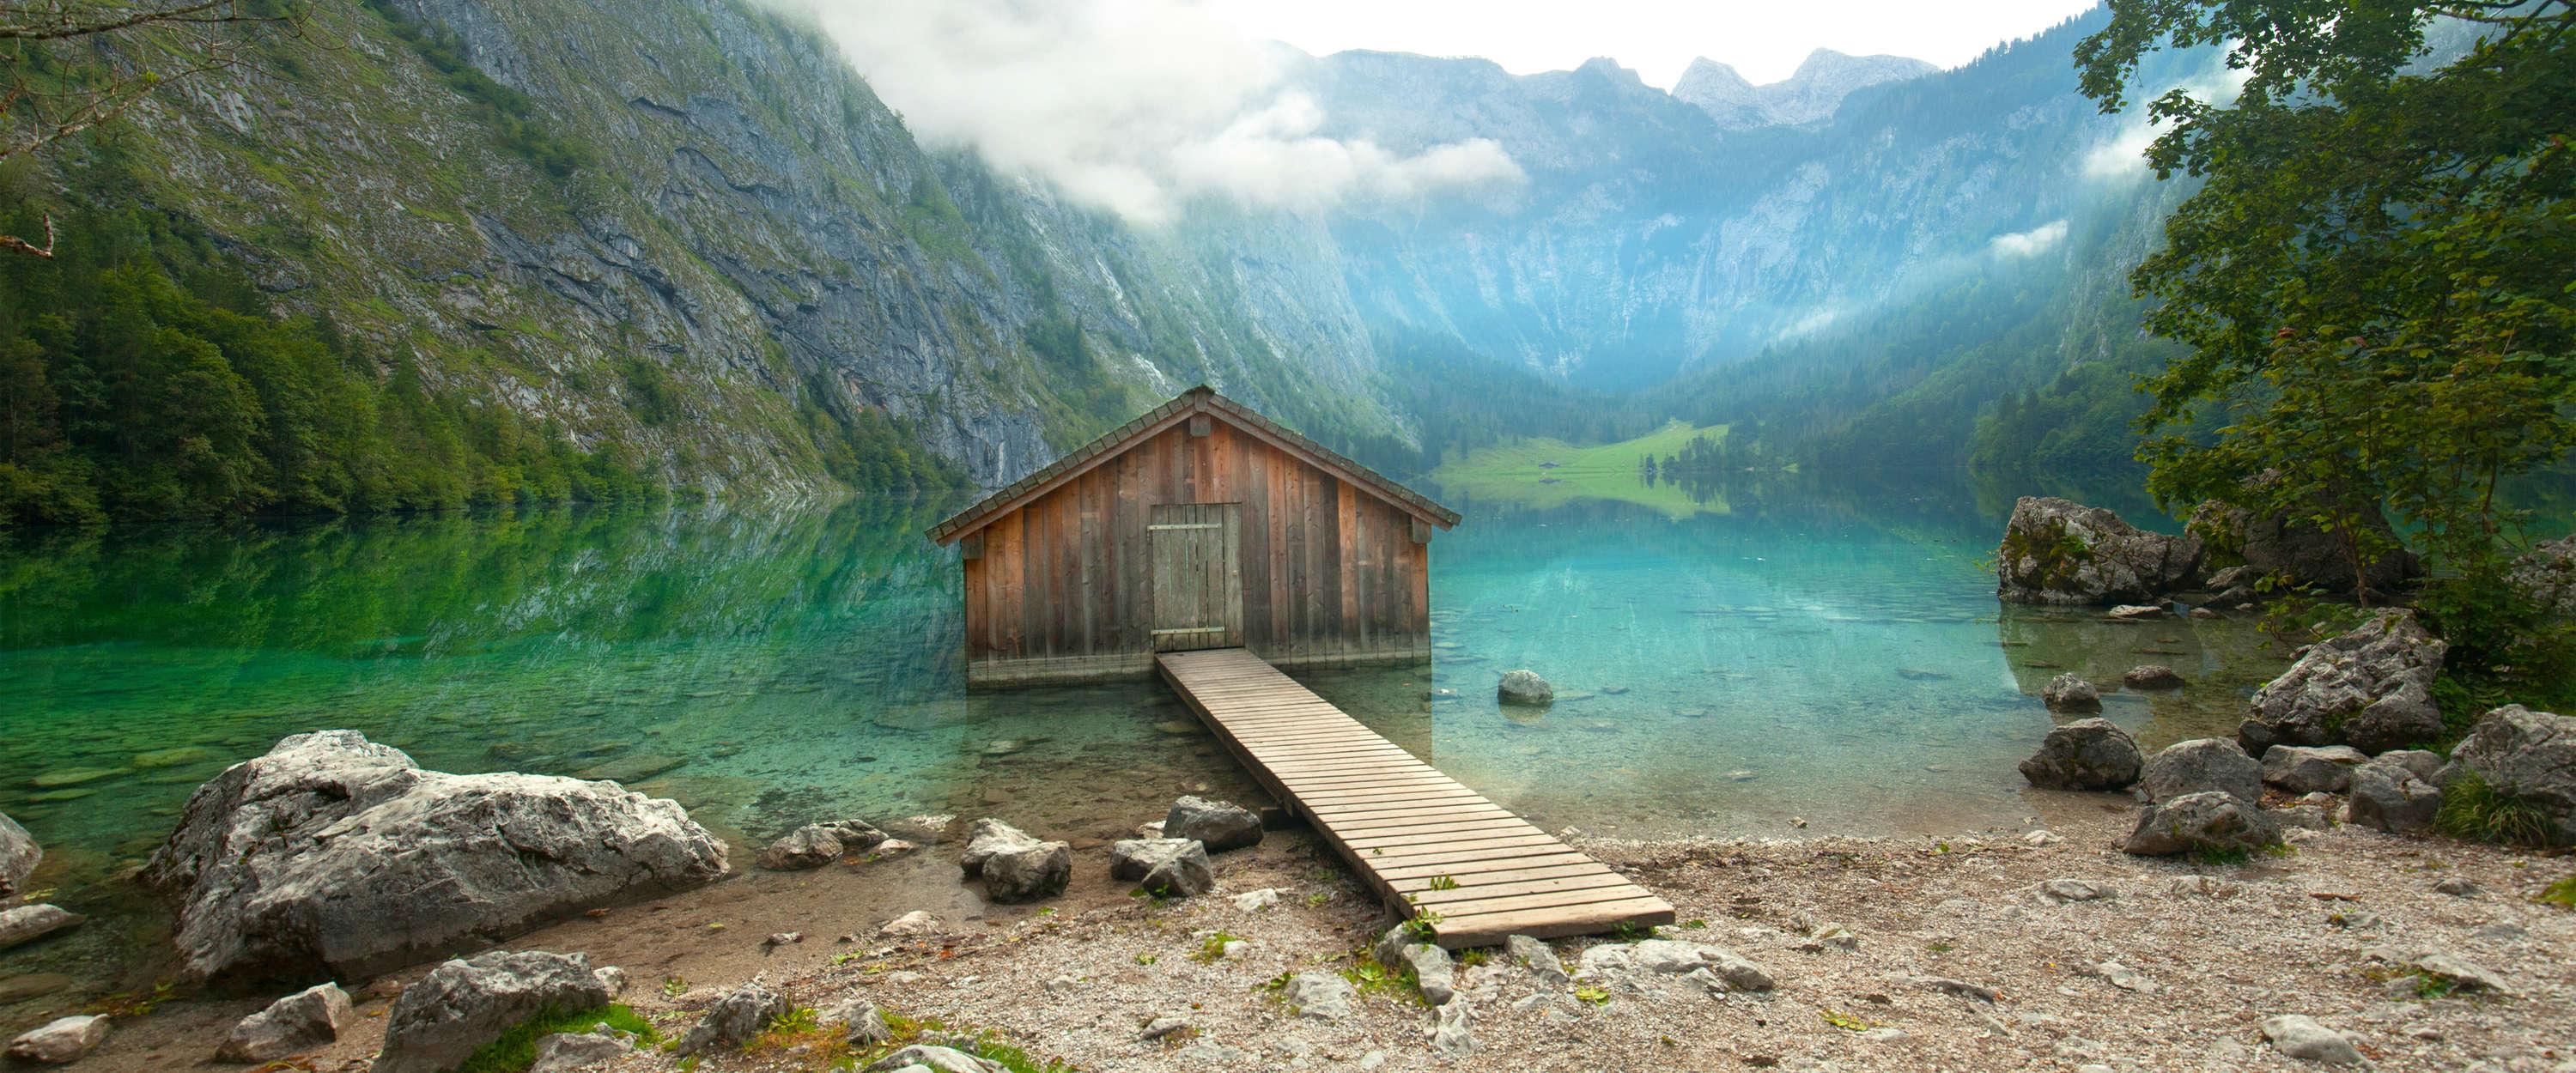             Fototapete Berghütte & See mit Holzsteg & Gipfelpanorama
        